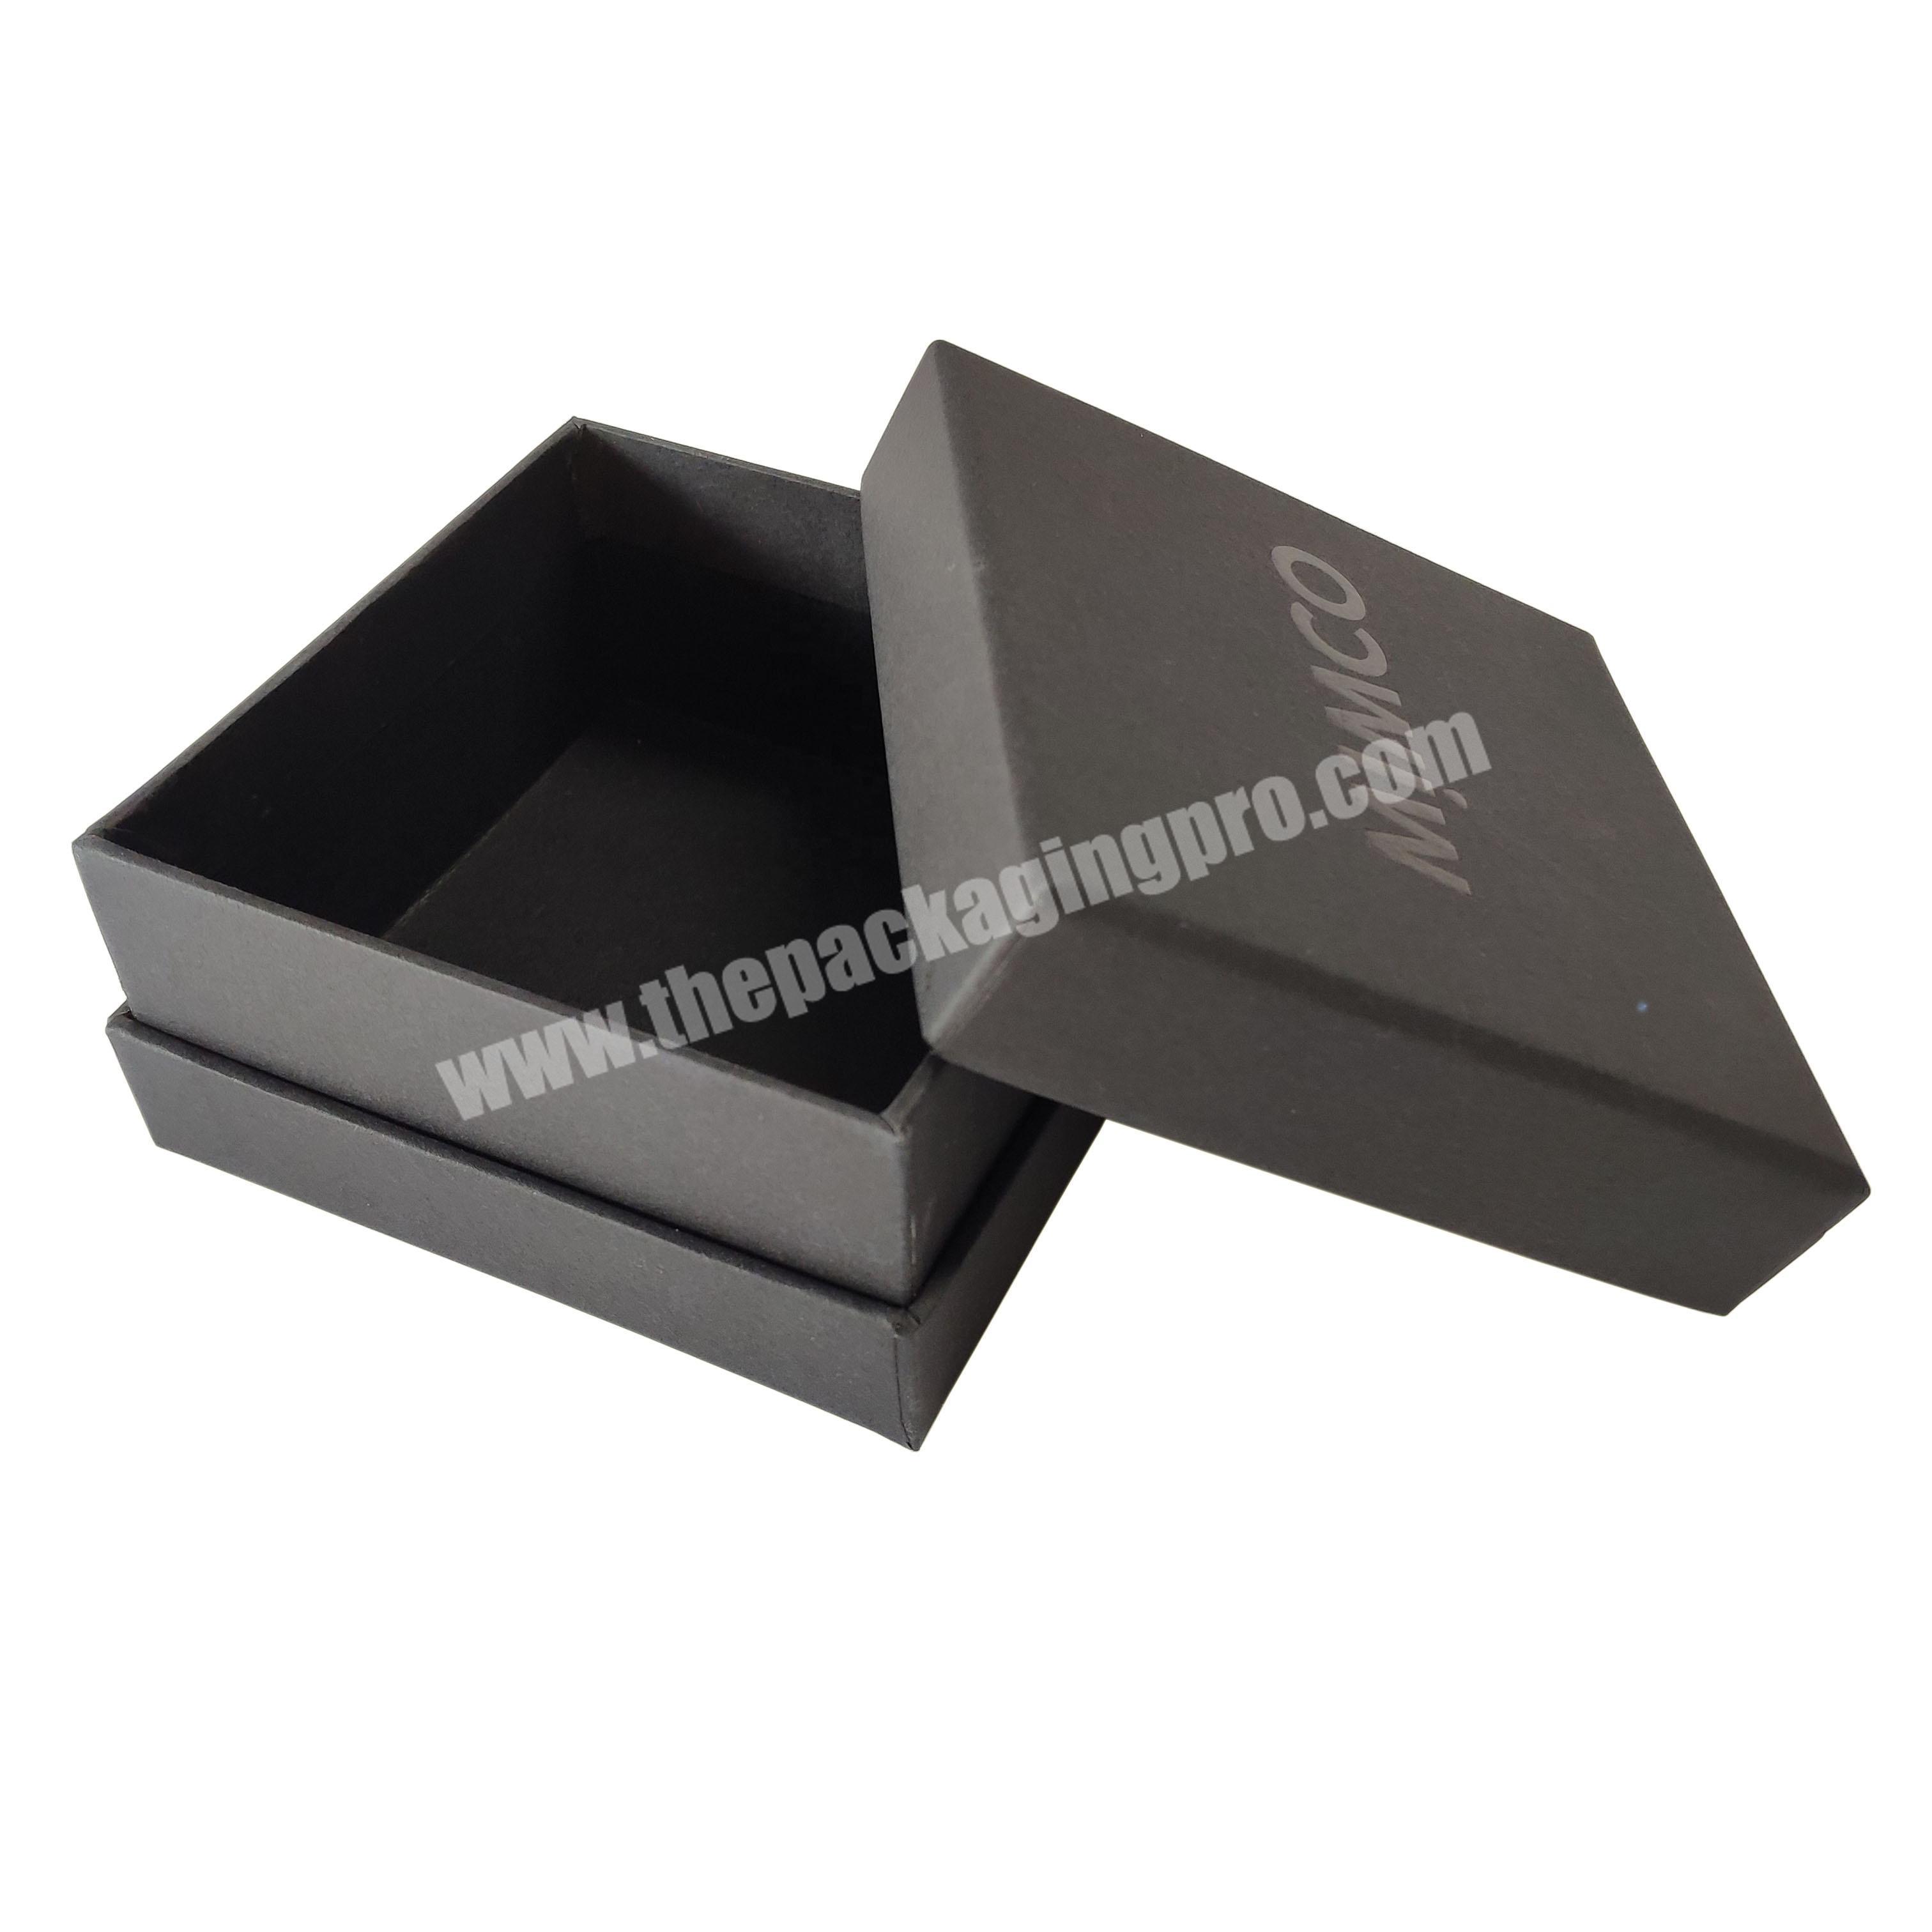 Matte black jewelry packaging box